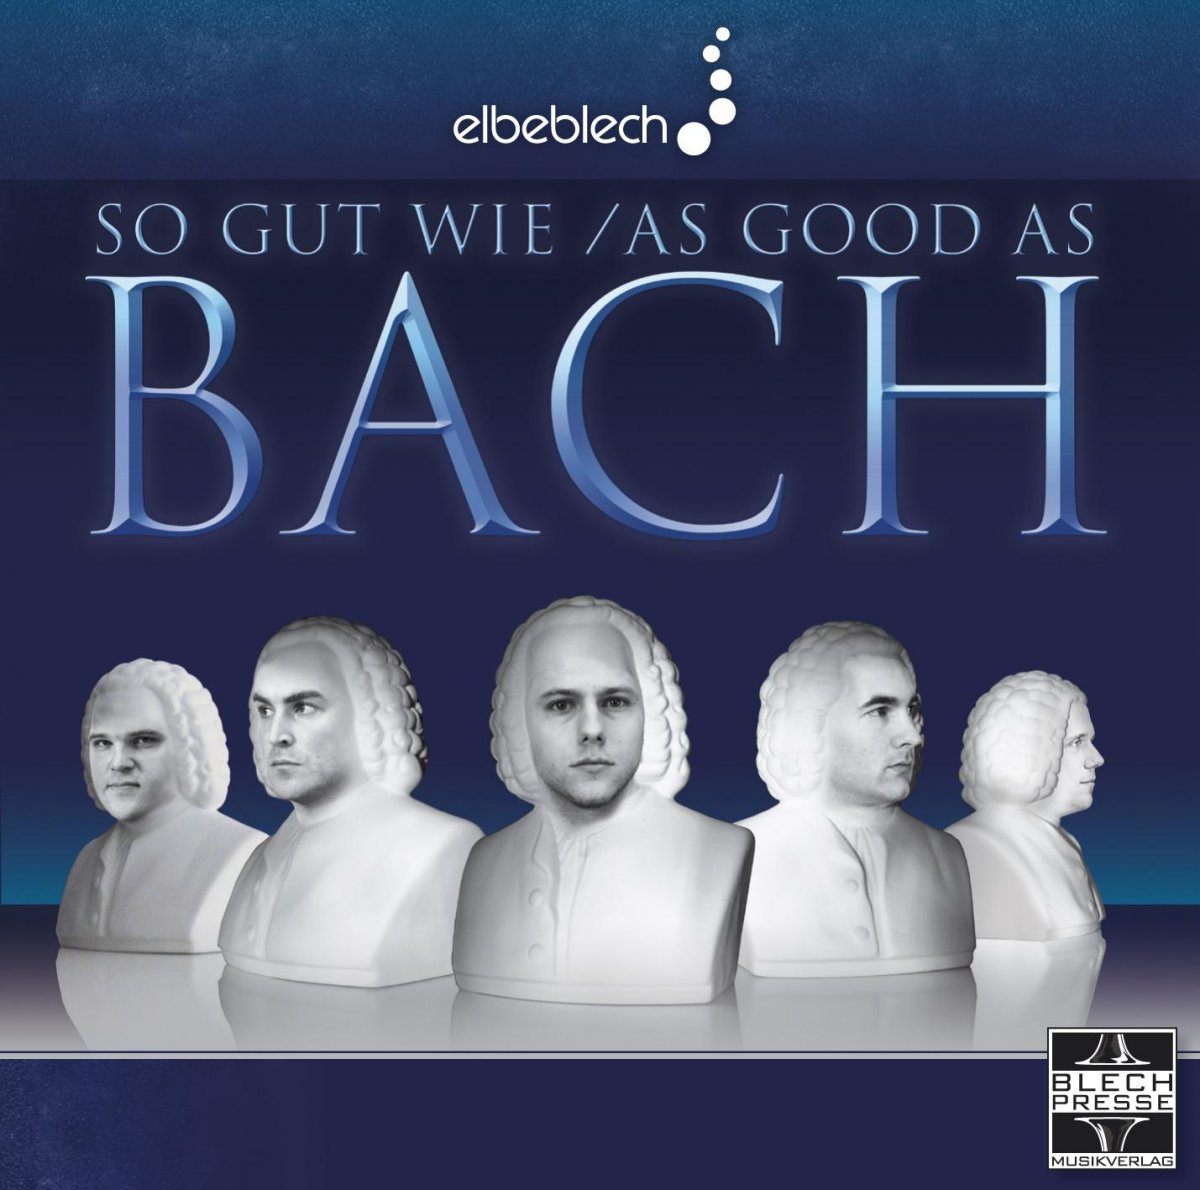 So gut wie Bach / As good as Bach - klik hier